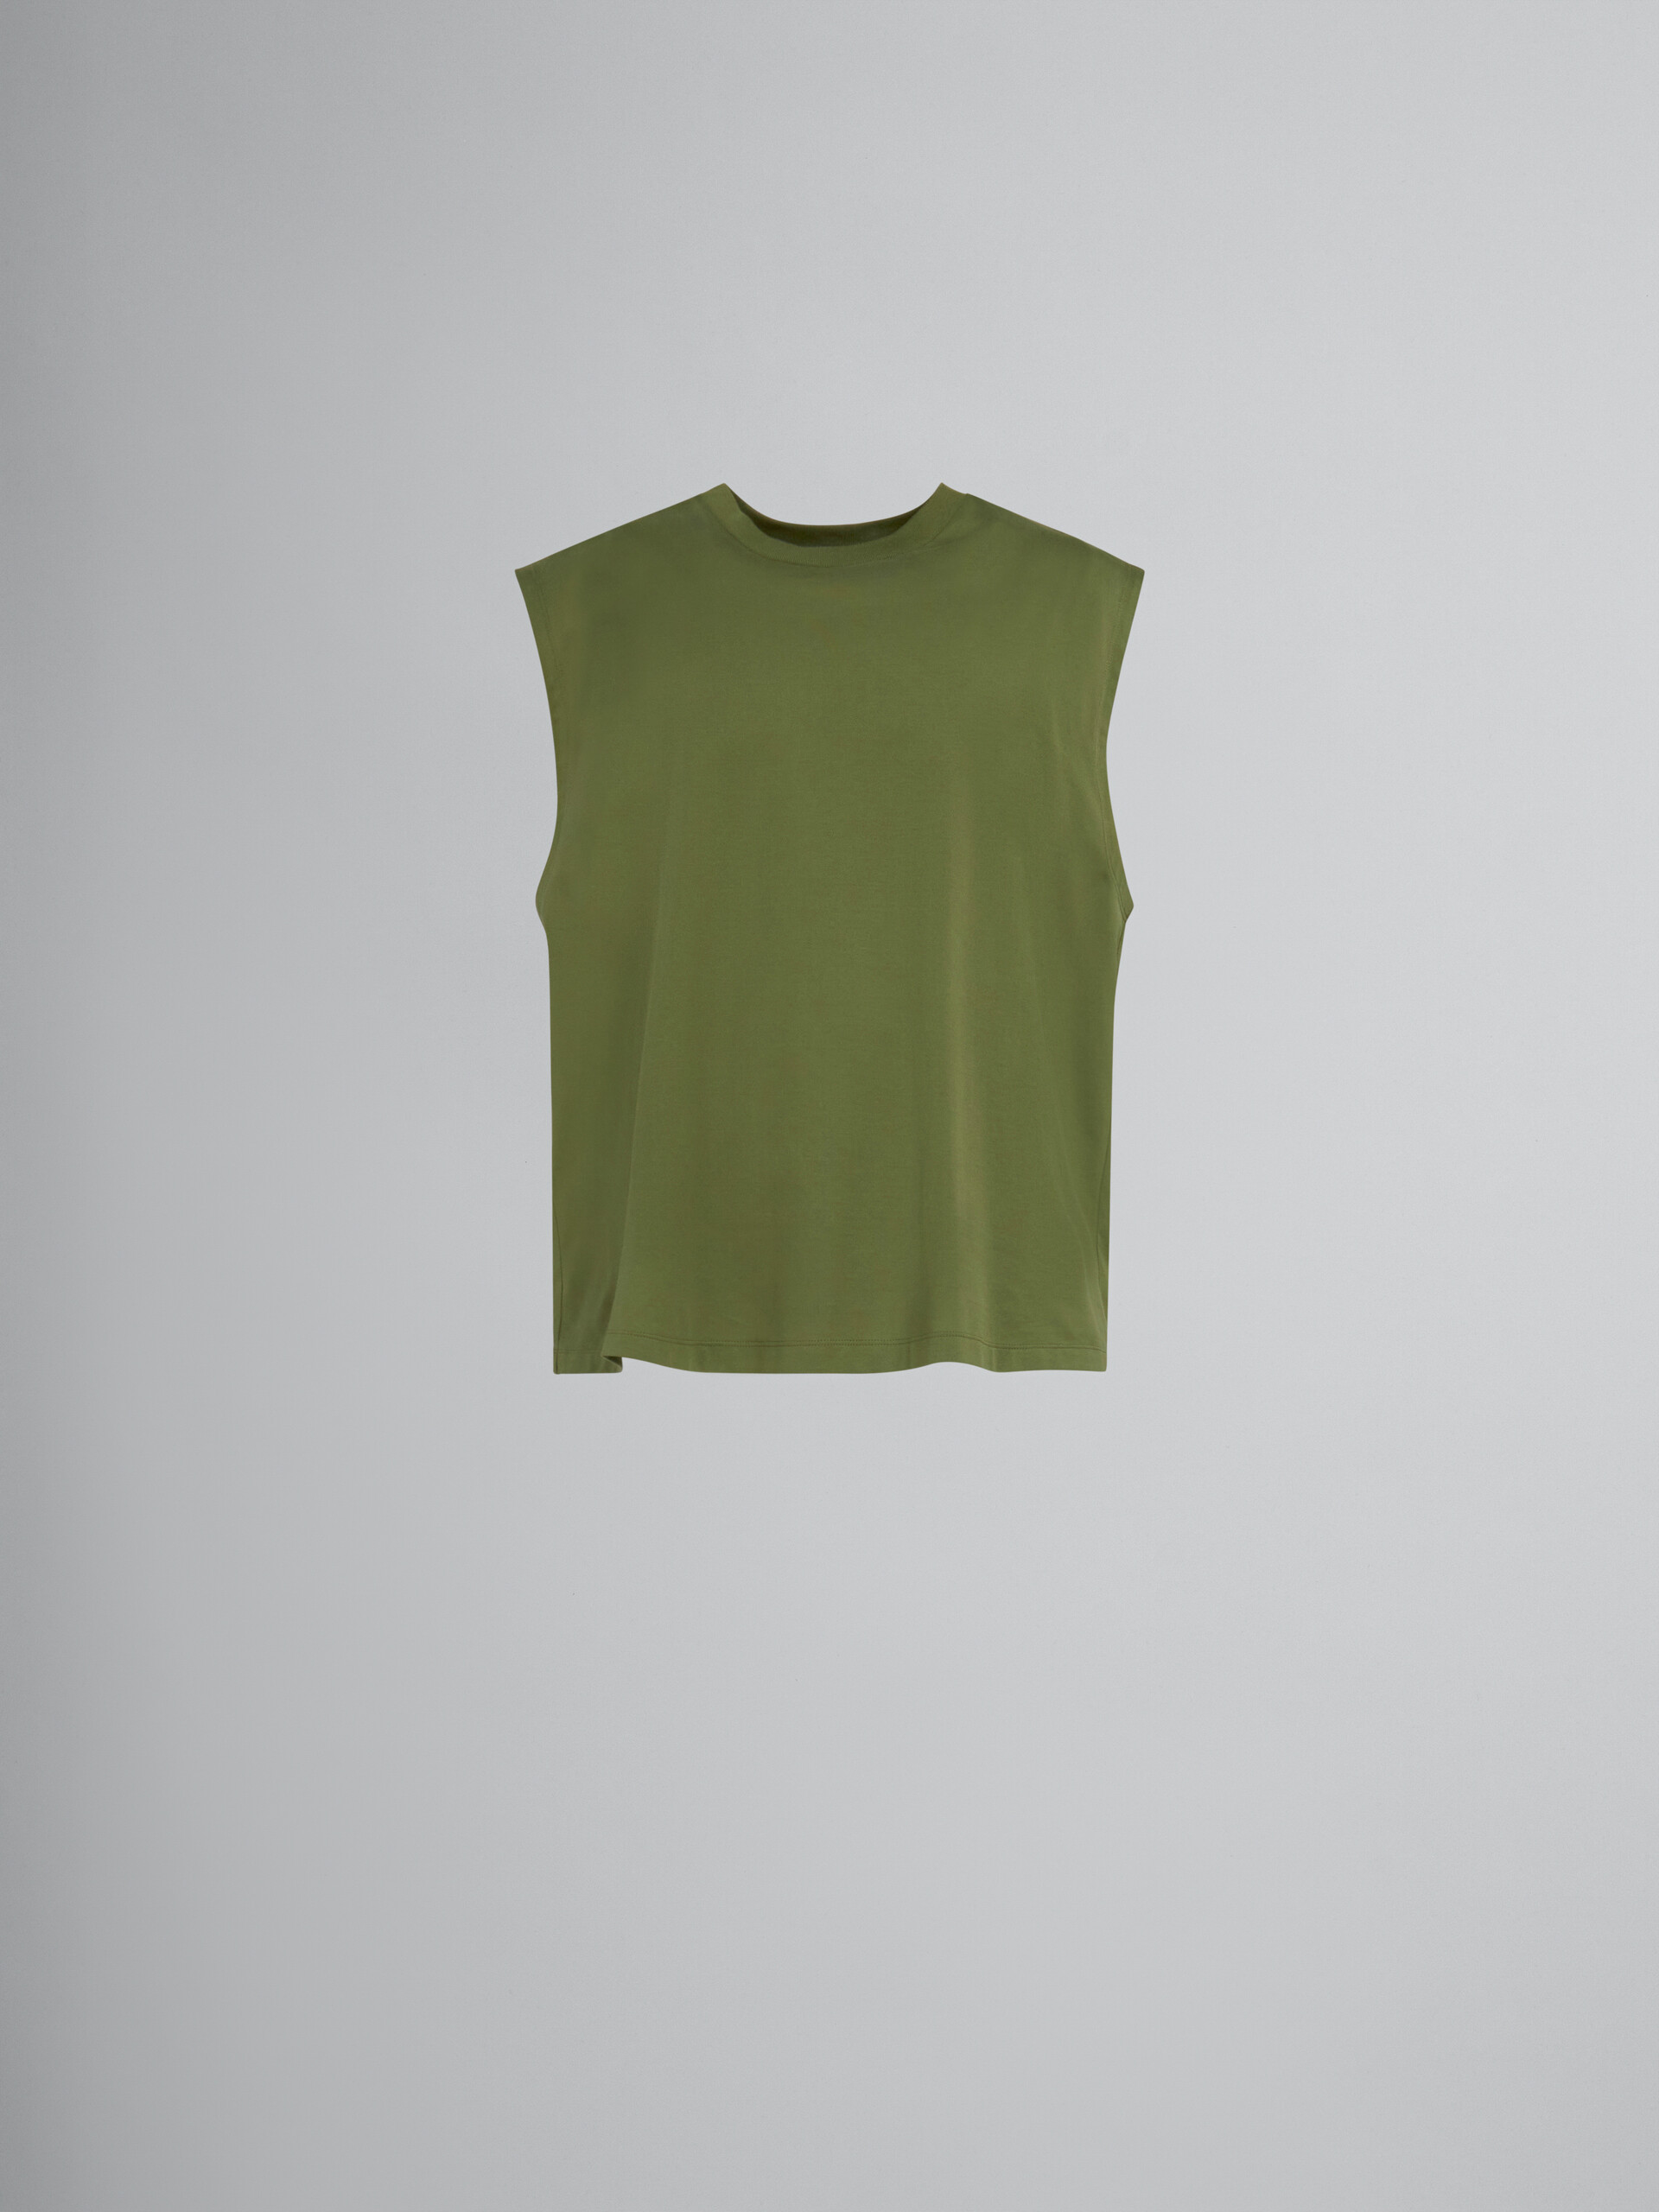 Green organic cotton tank top with Marni Dripping print - T-shirts - Image 1